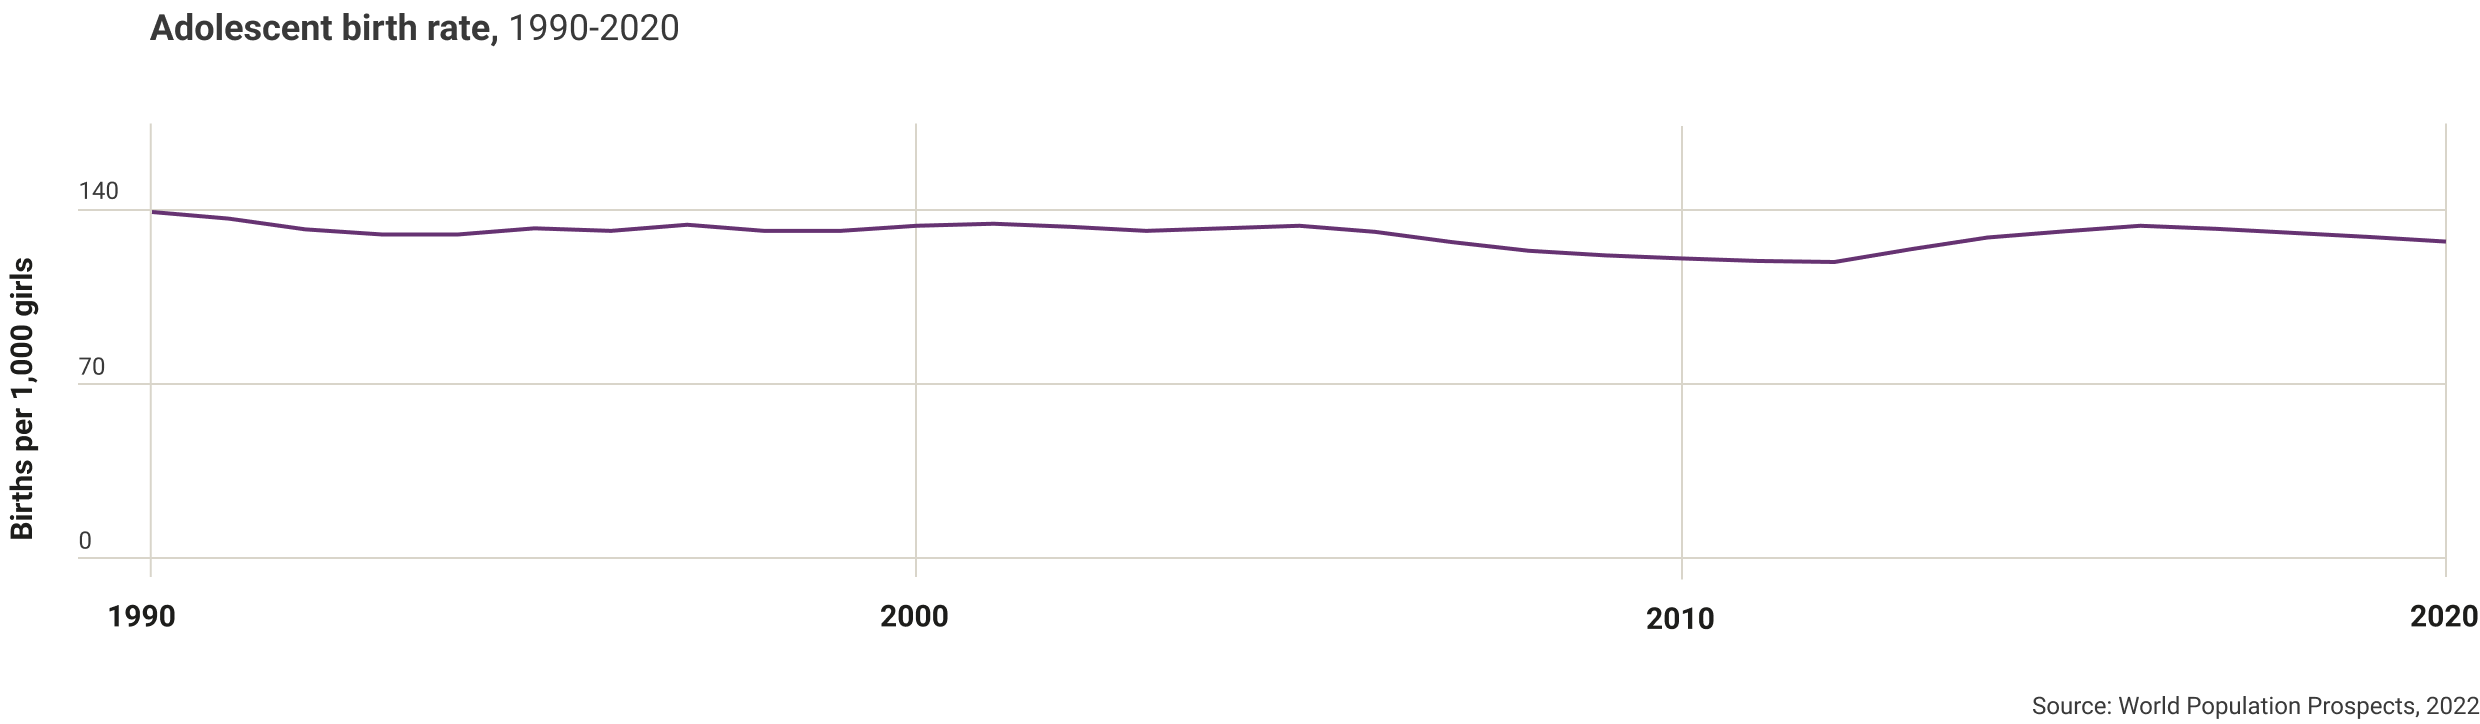 tanzania-adolescence-birth-rate-1990-2020.png